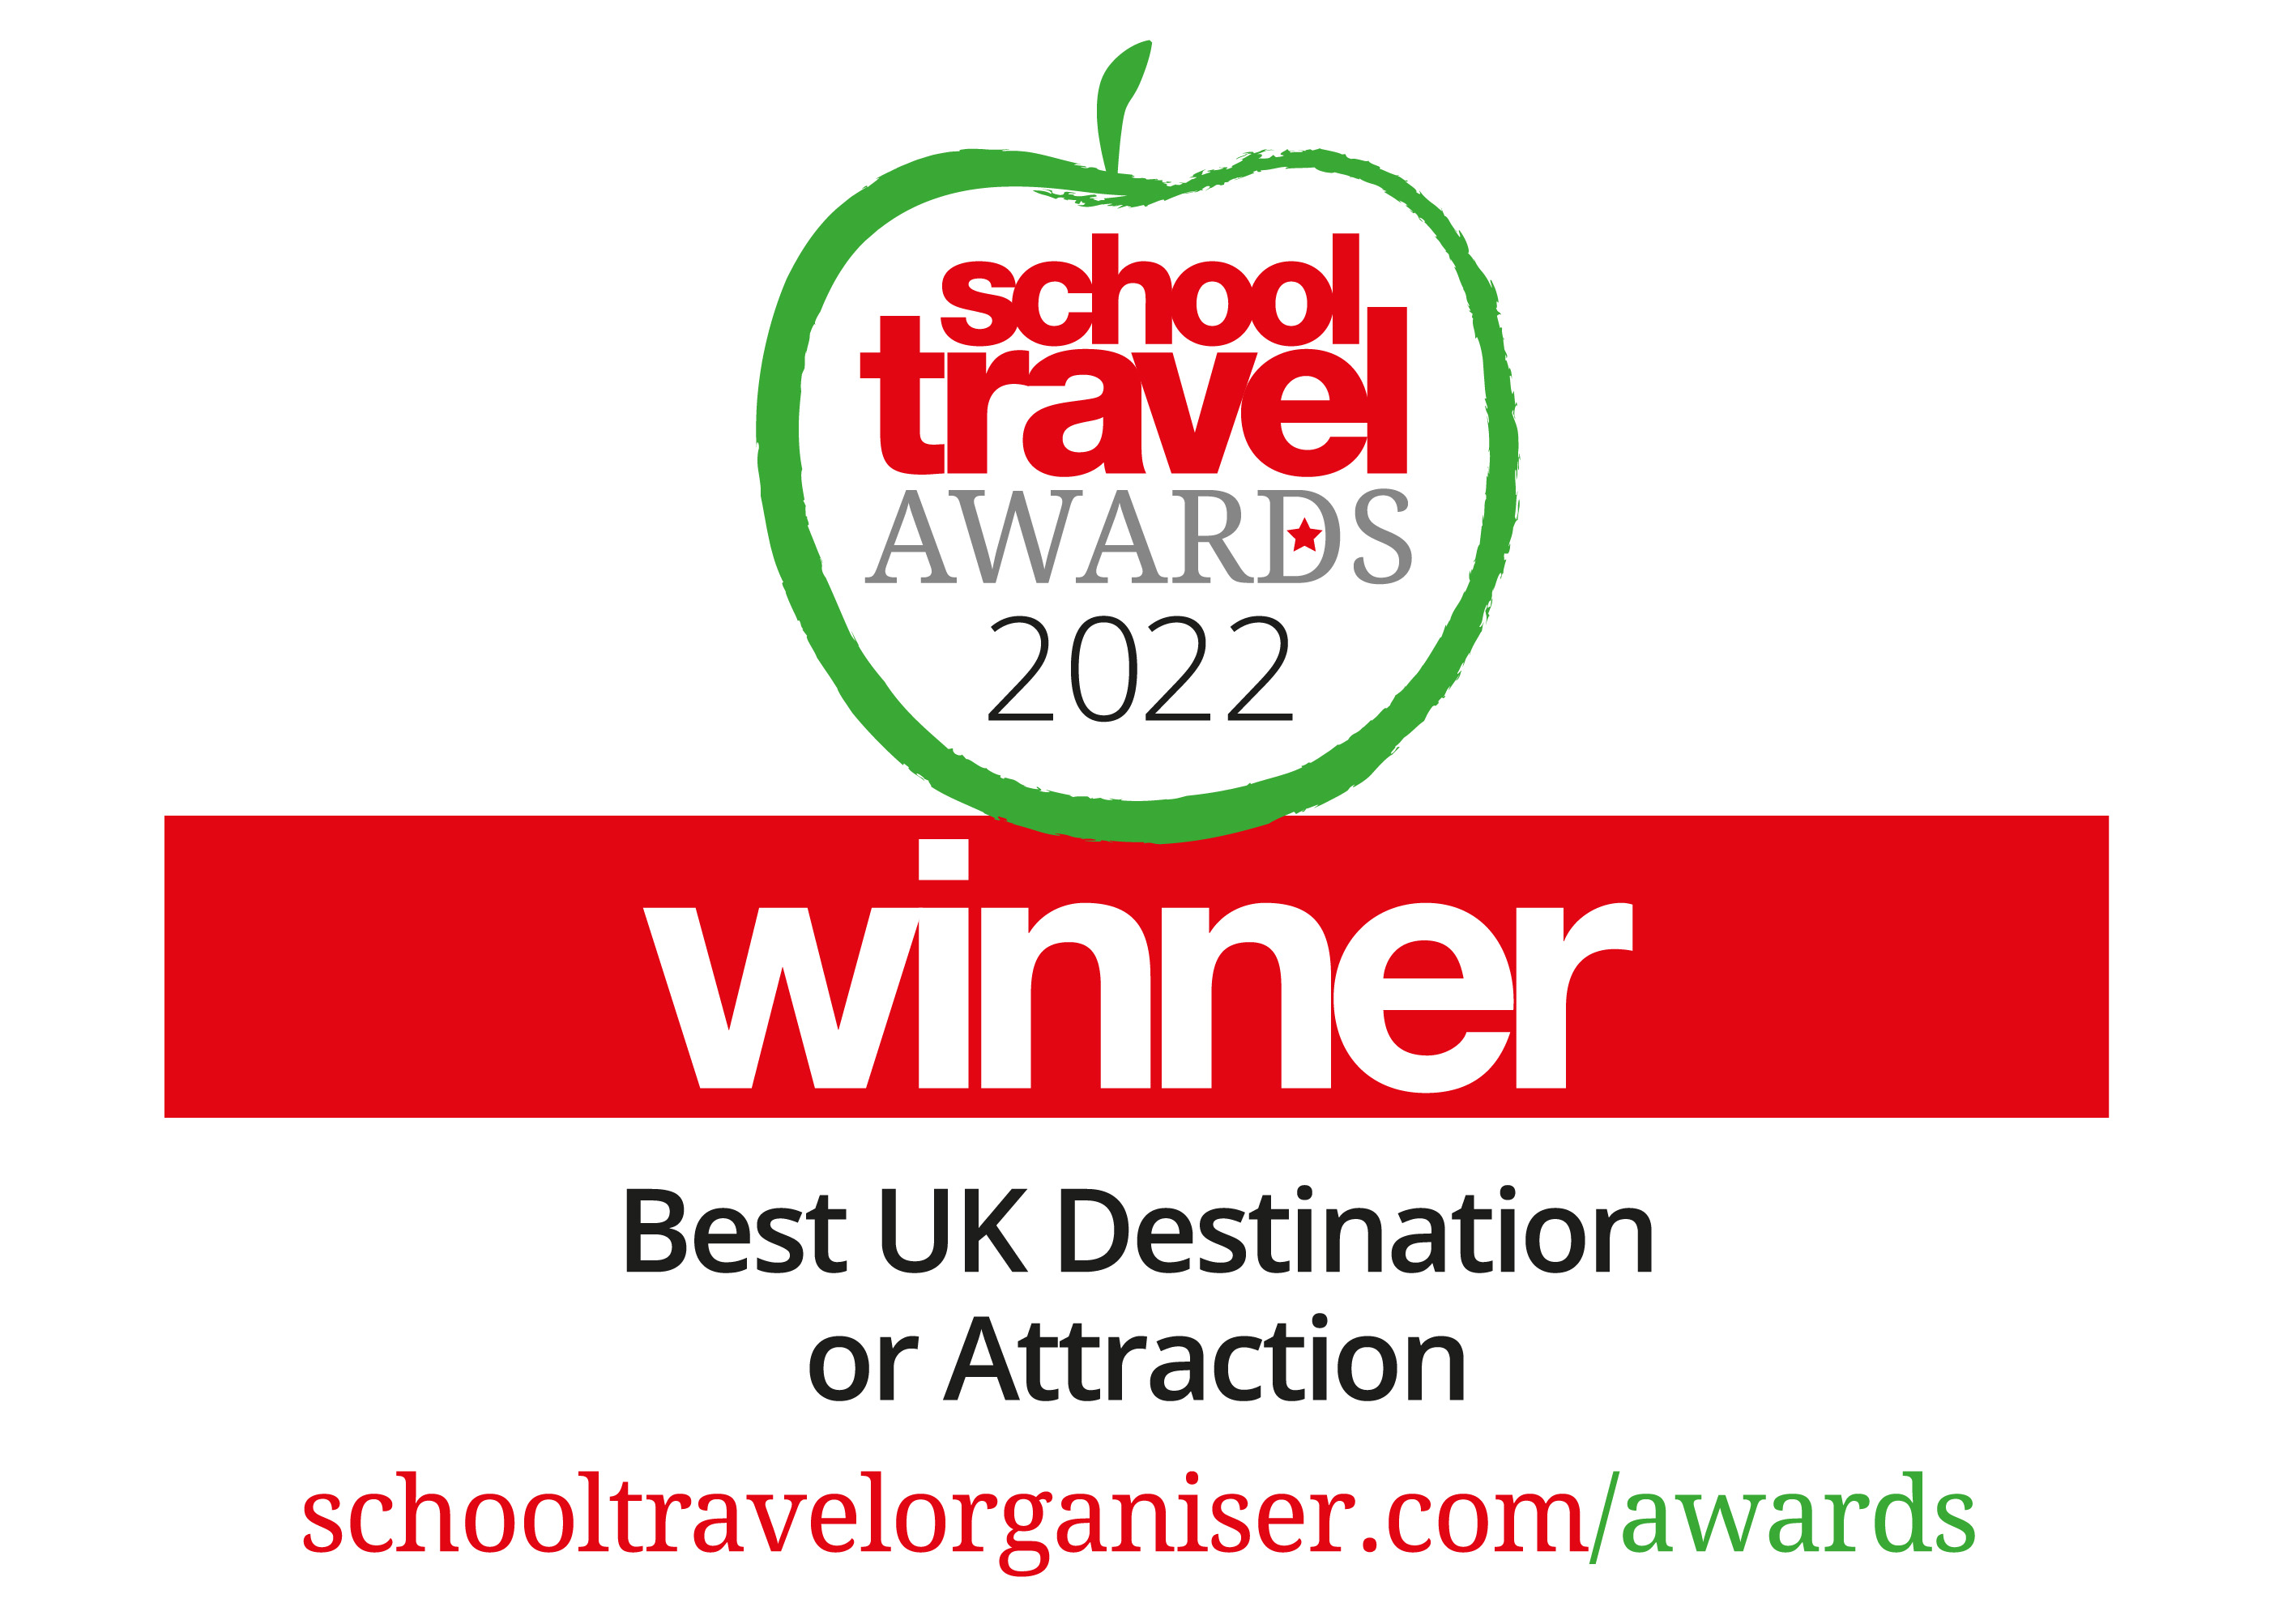 School Travel Awards 2022 Winner of Best UK Destination or Attraction - LEGOLAND Windsor Resort